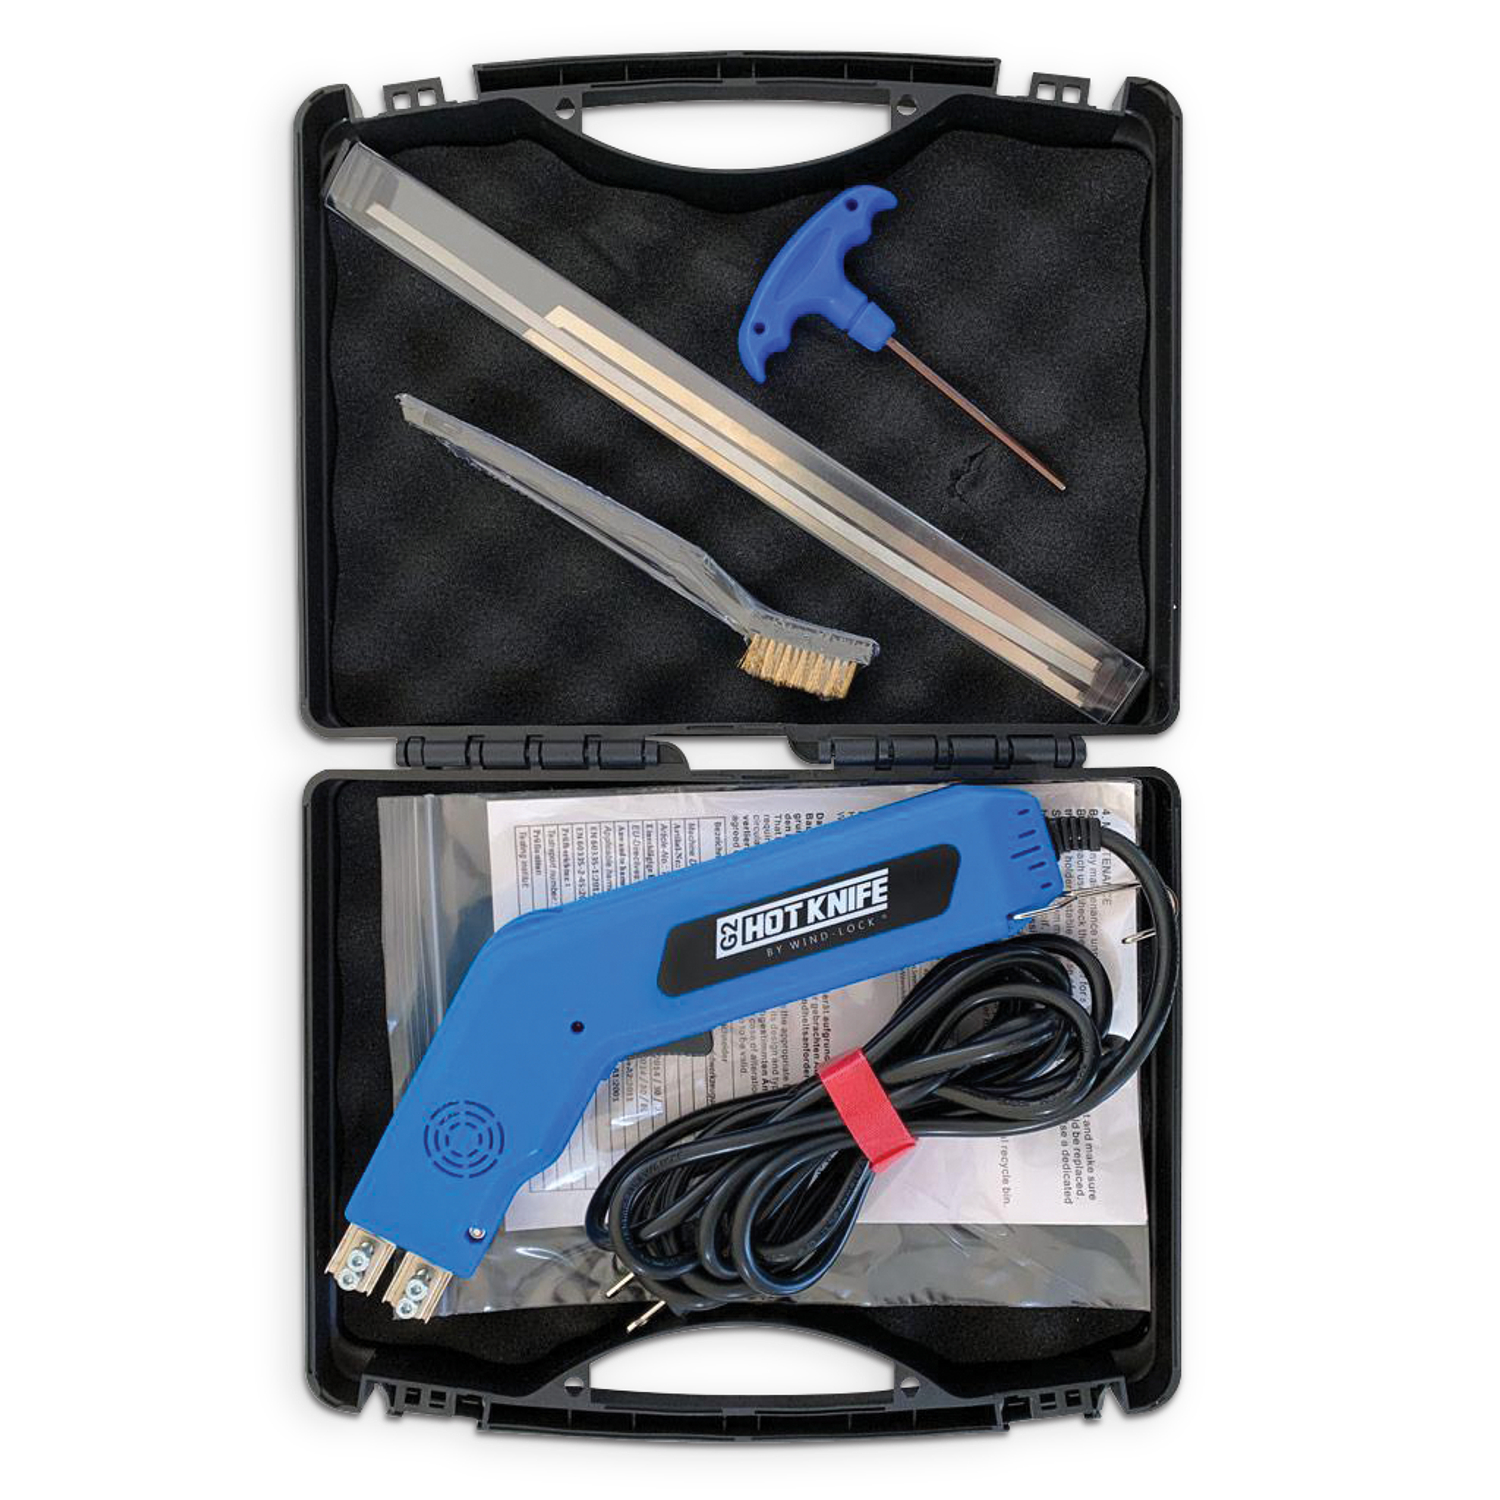 HGO Store - Hot Knife Plastic Cutter Tool WHK - 0005